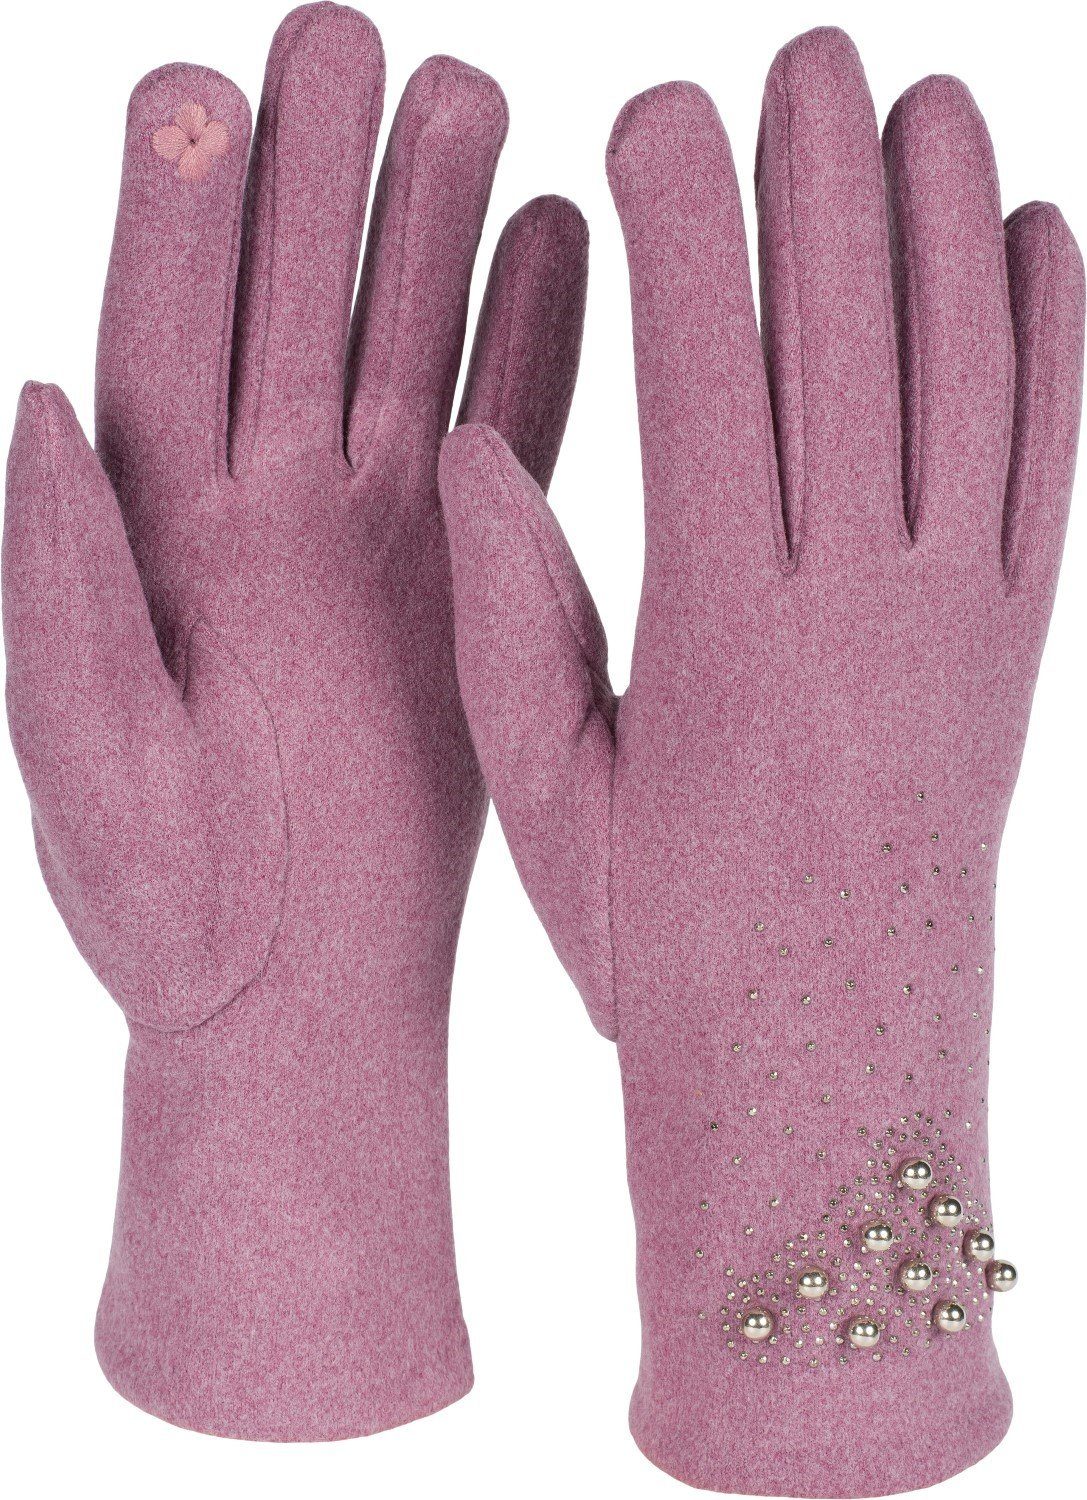 styleBREAKER Fleecehandschuhe Touchscreen Handschuhe mit Perlen Mauve und Strass